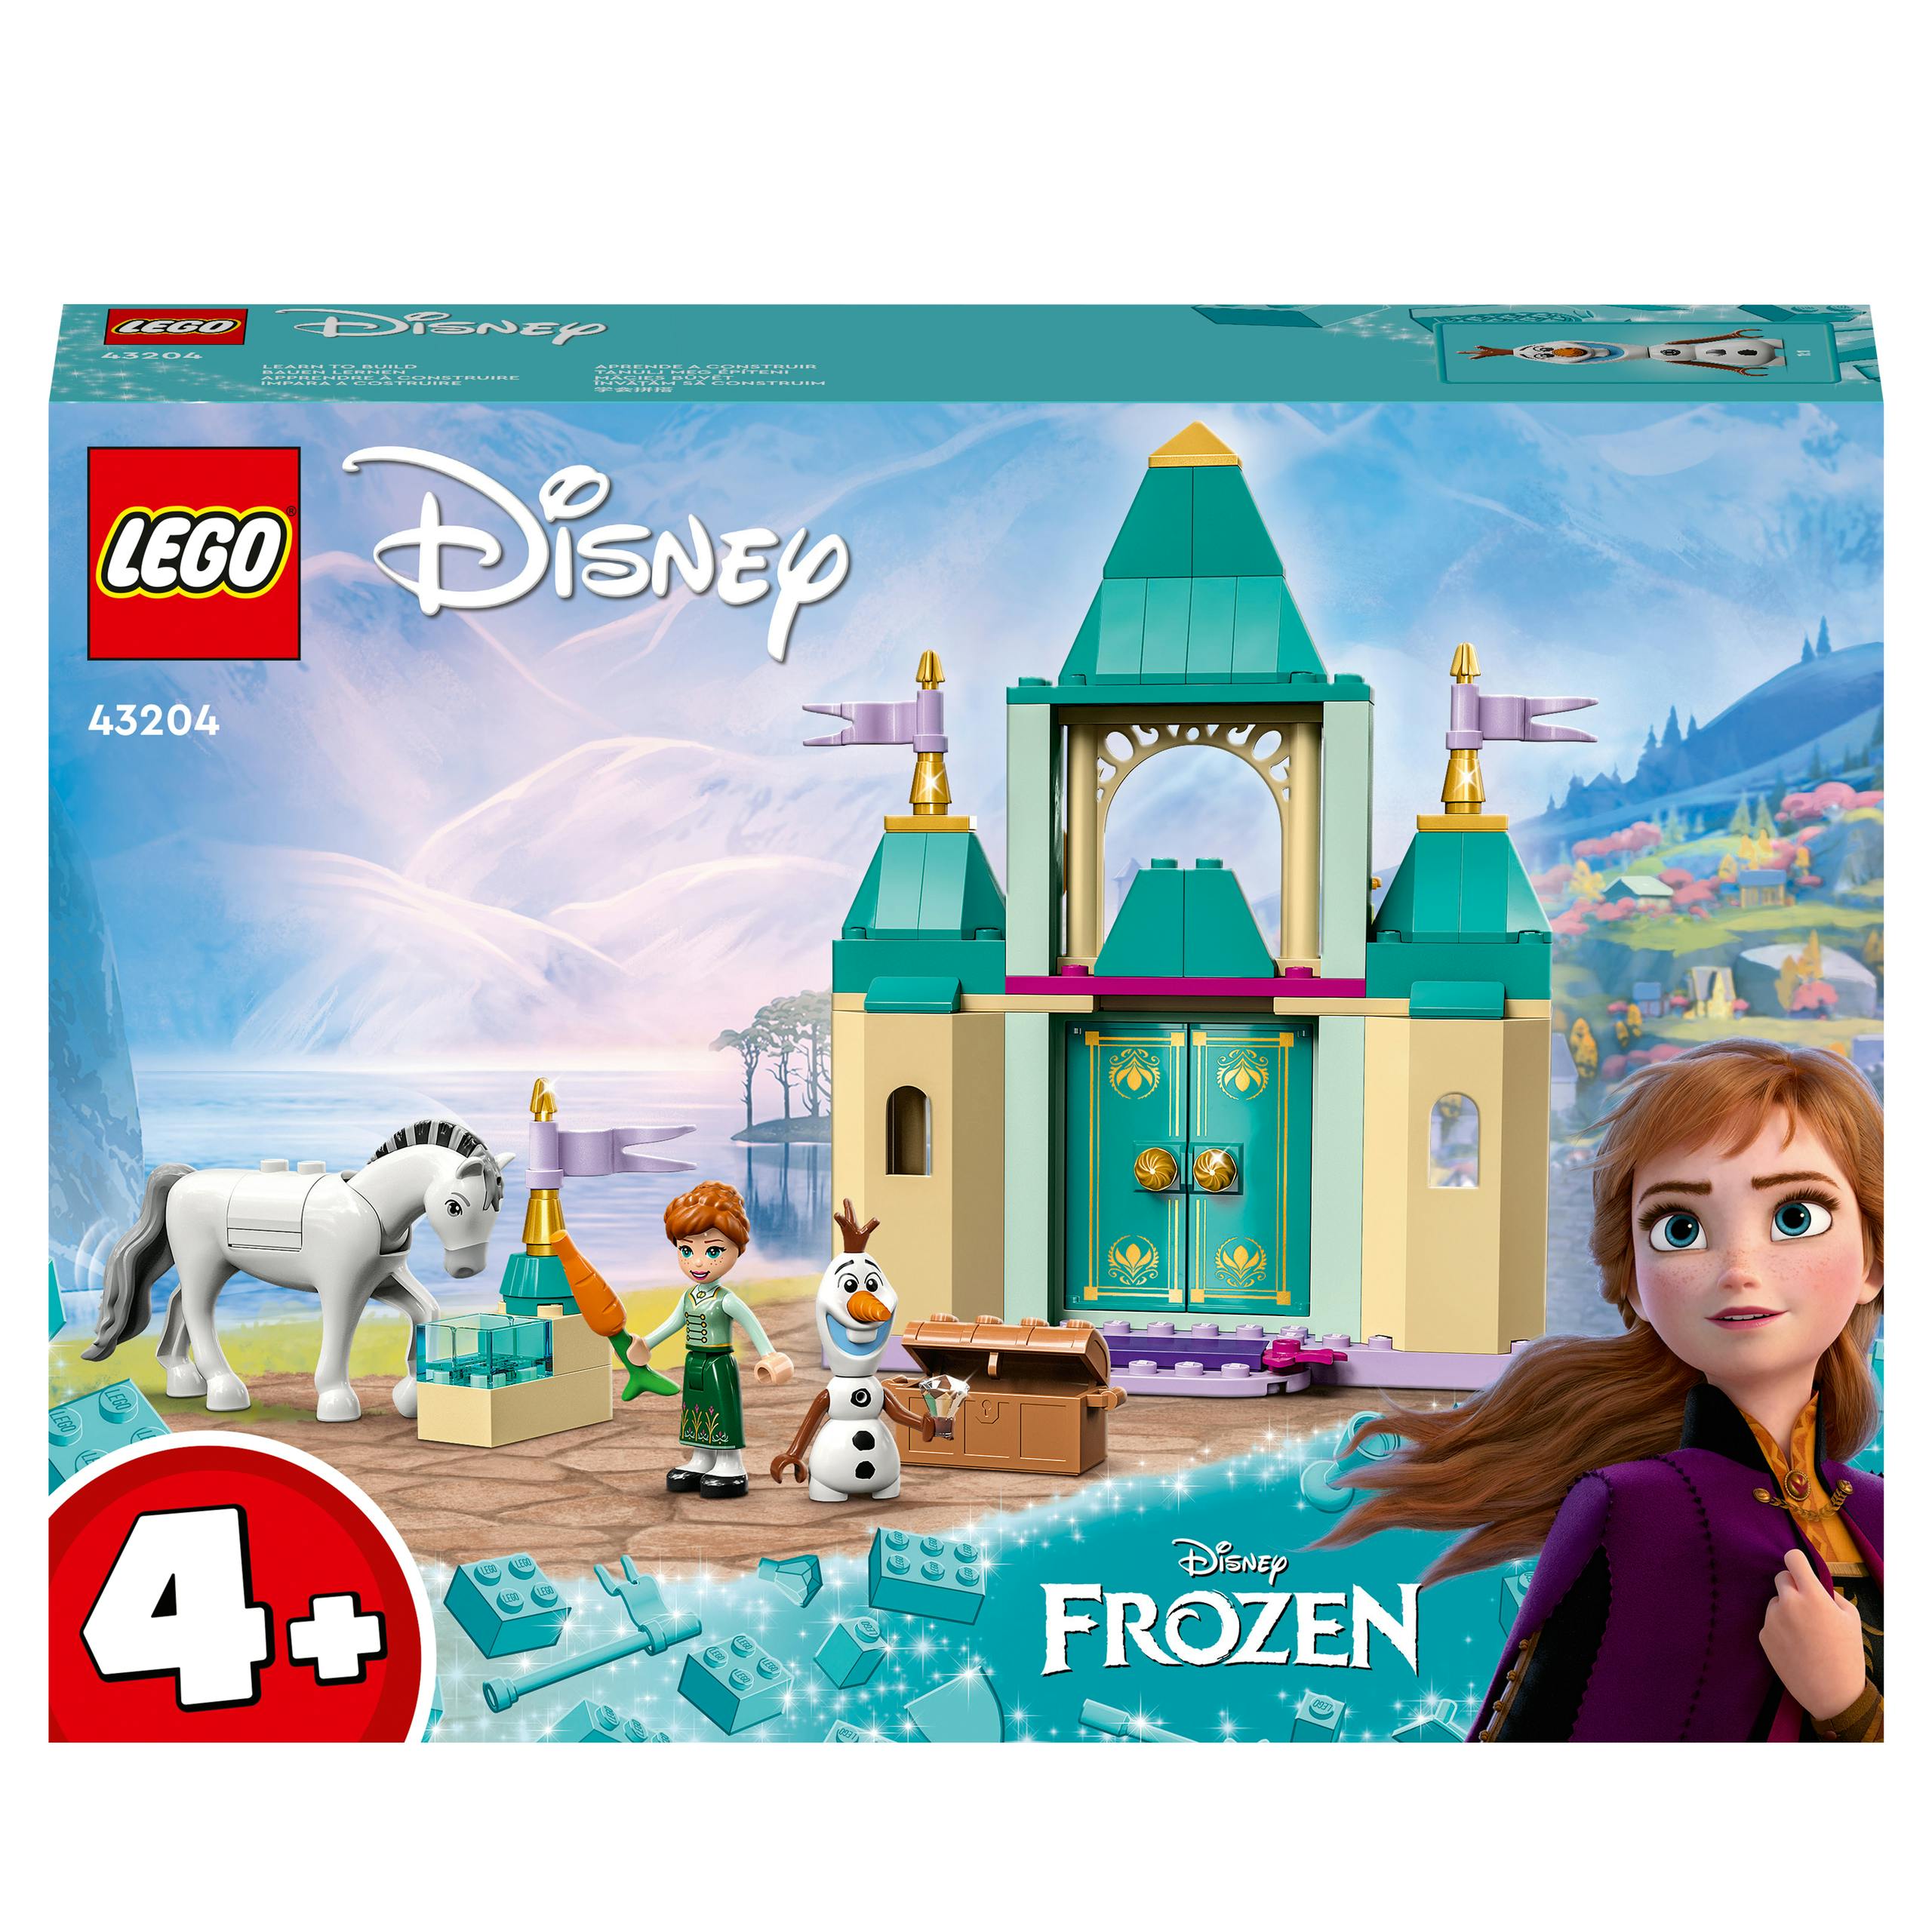 LEGO Disney Frozen Anna En Olaf Plezier In Het Kasteel (43204)